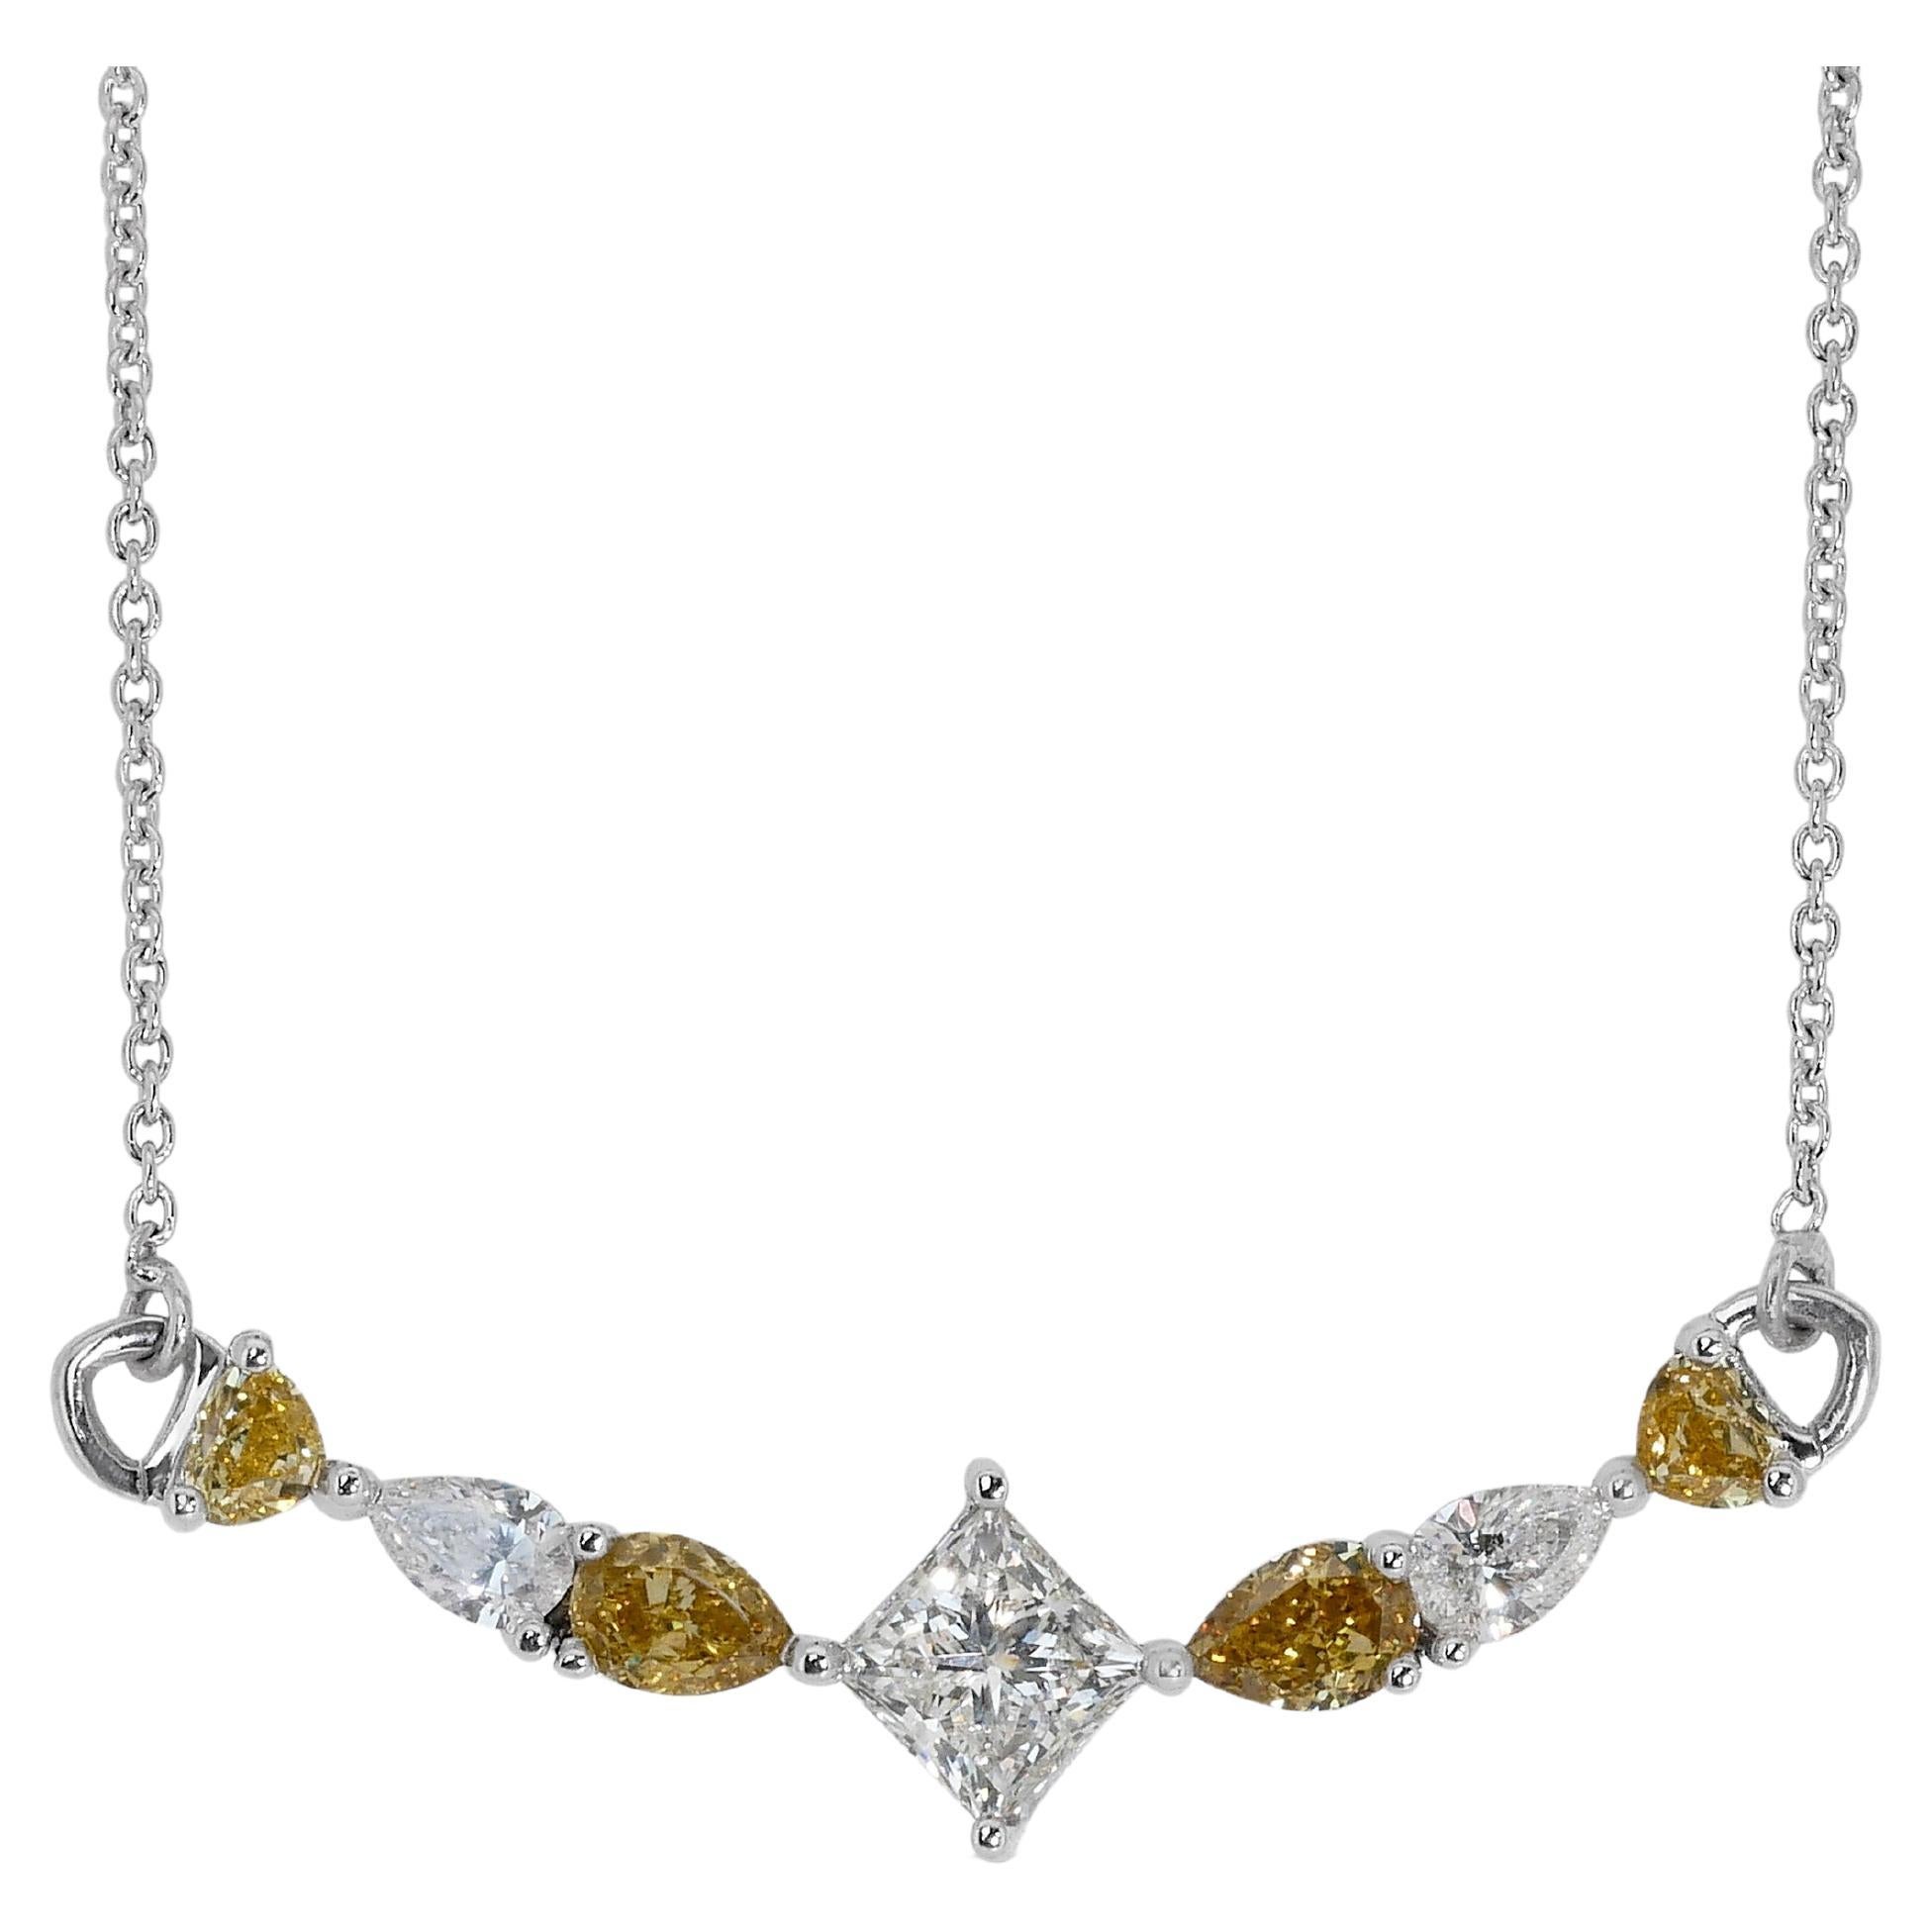 Marvelous 18k White Gold Necklace w/ 1.9 Carat Natural Diamonds IGI Certificate